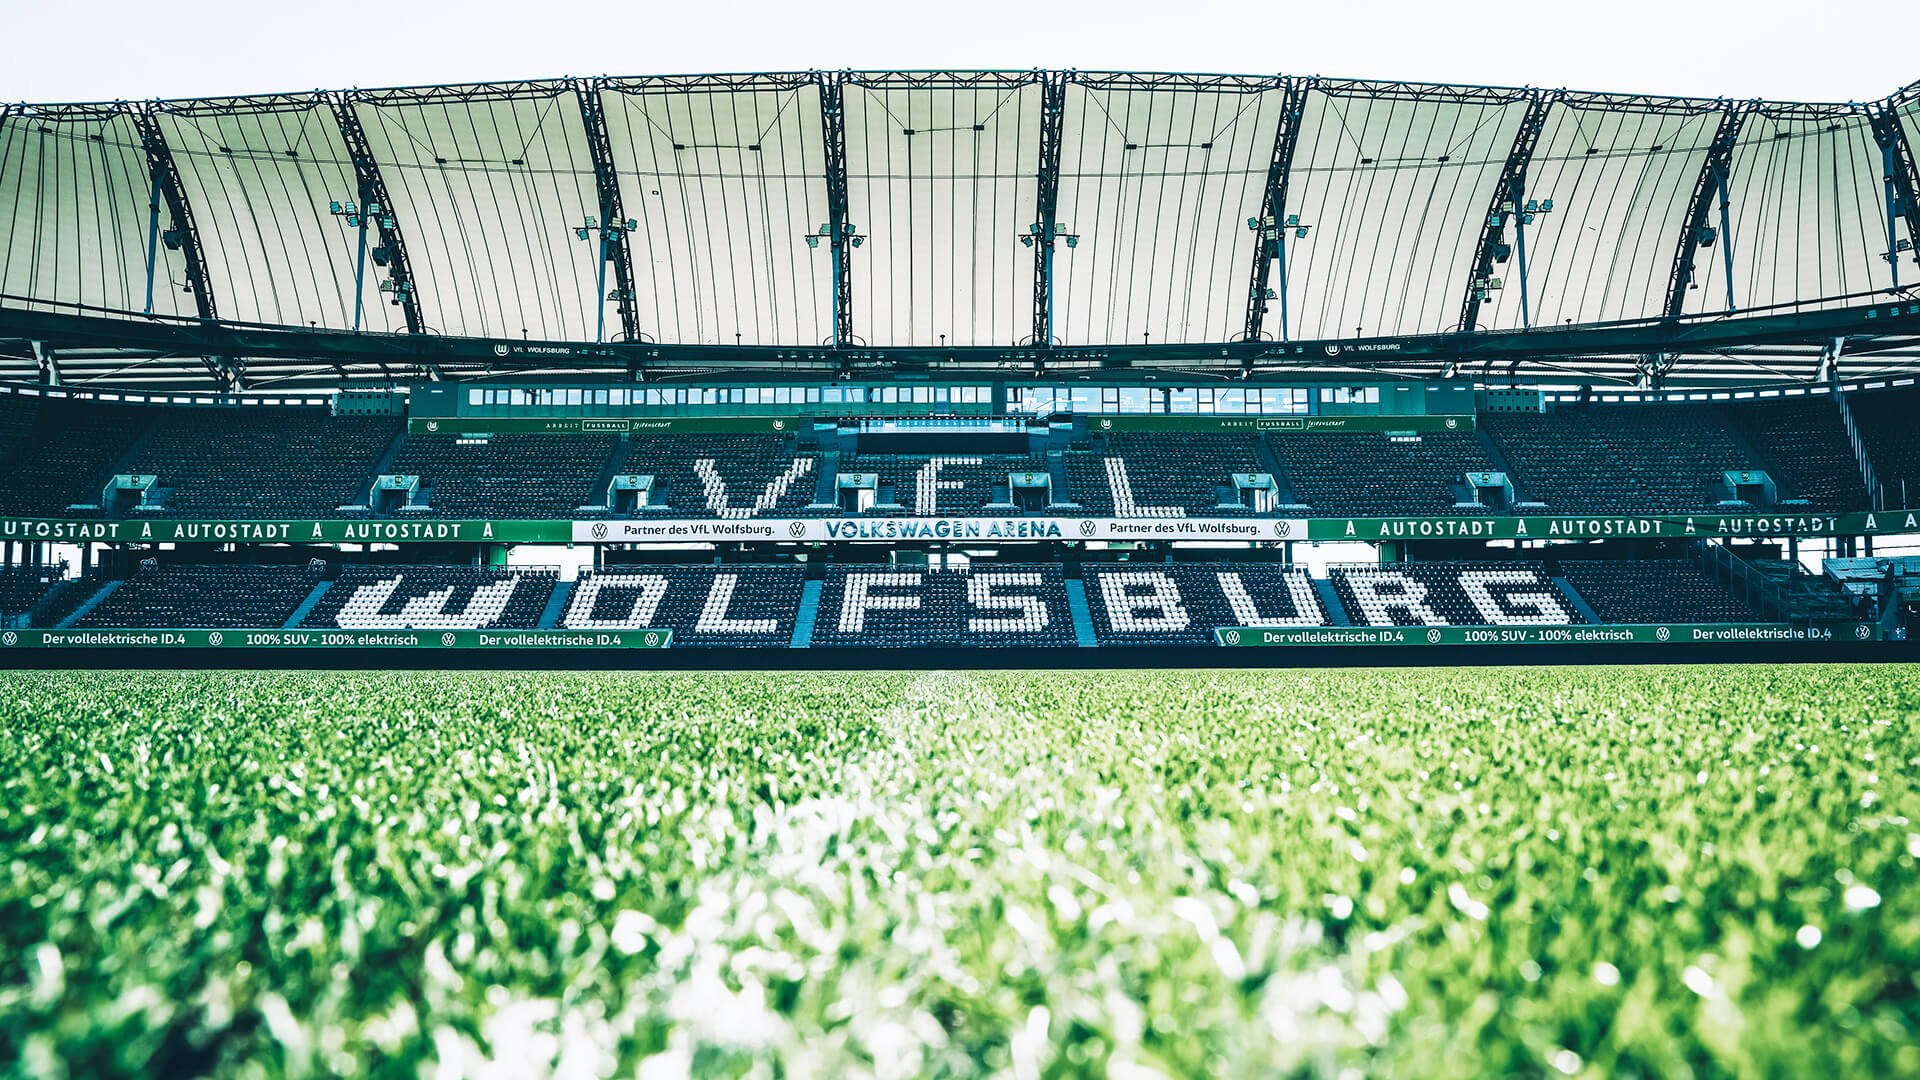 Stadium tours | VfL Wolfsburg